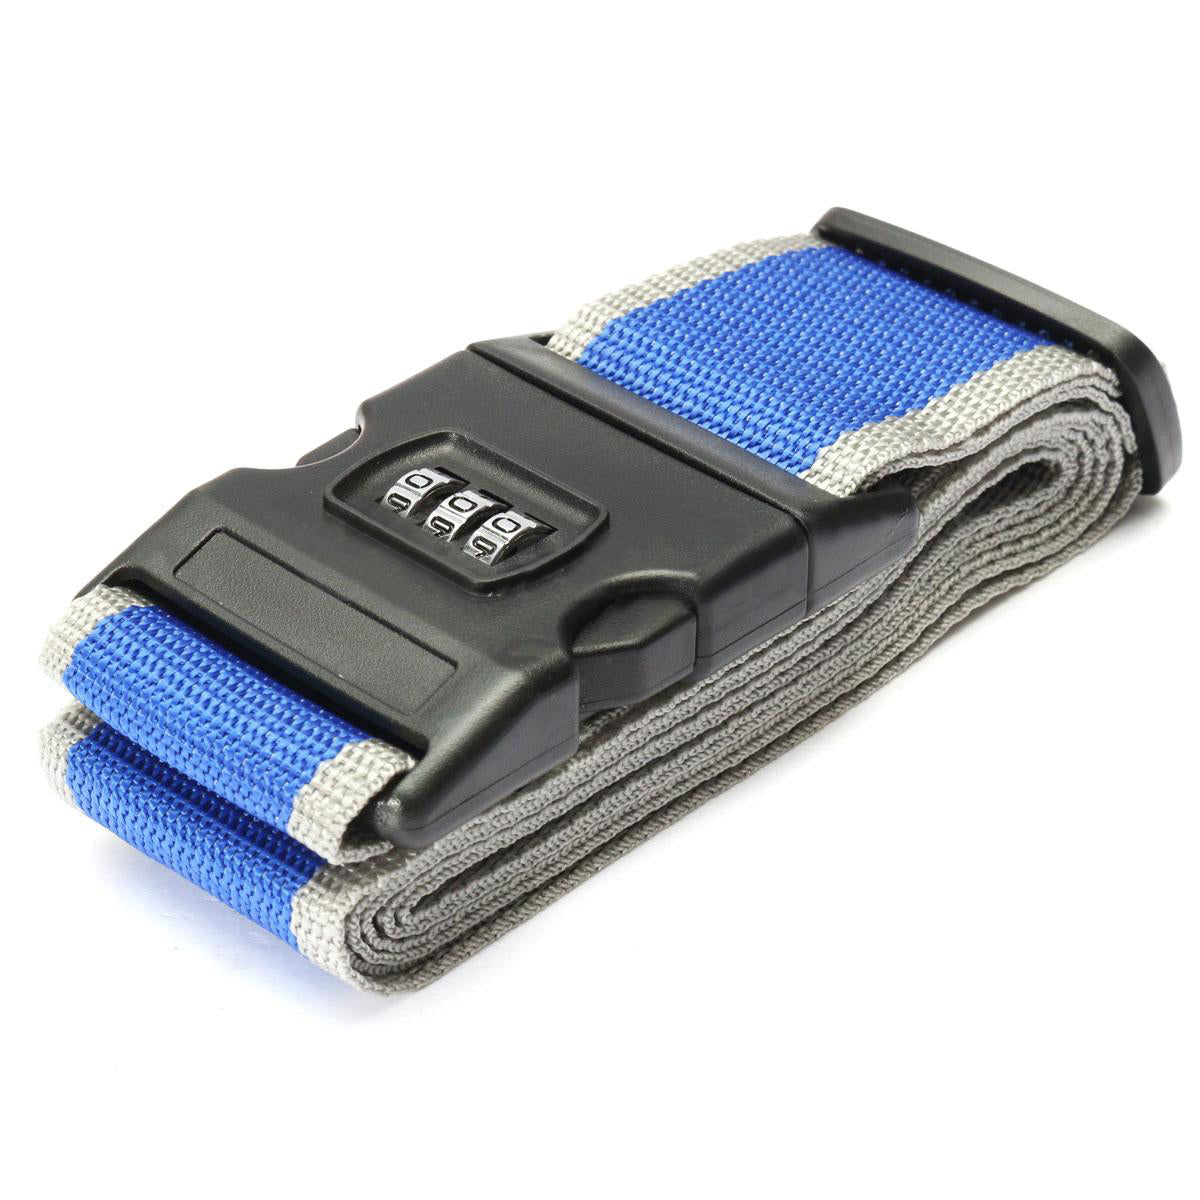 Safety belt Belt Lock Combination Travel Luggage Suitcase band color:Blue + Grey - ebowsos